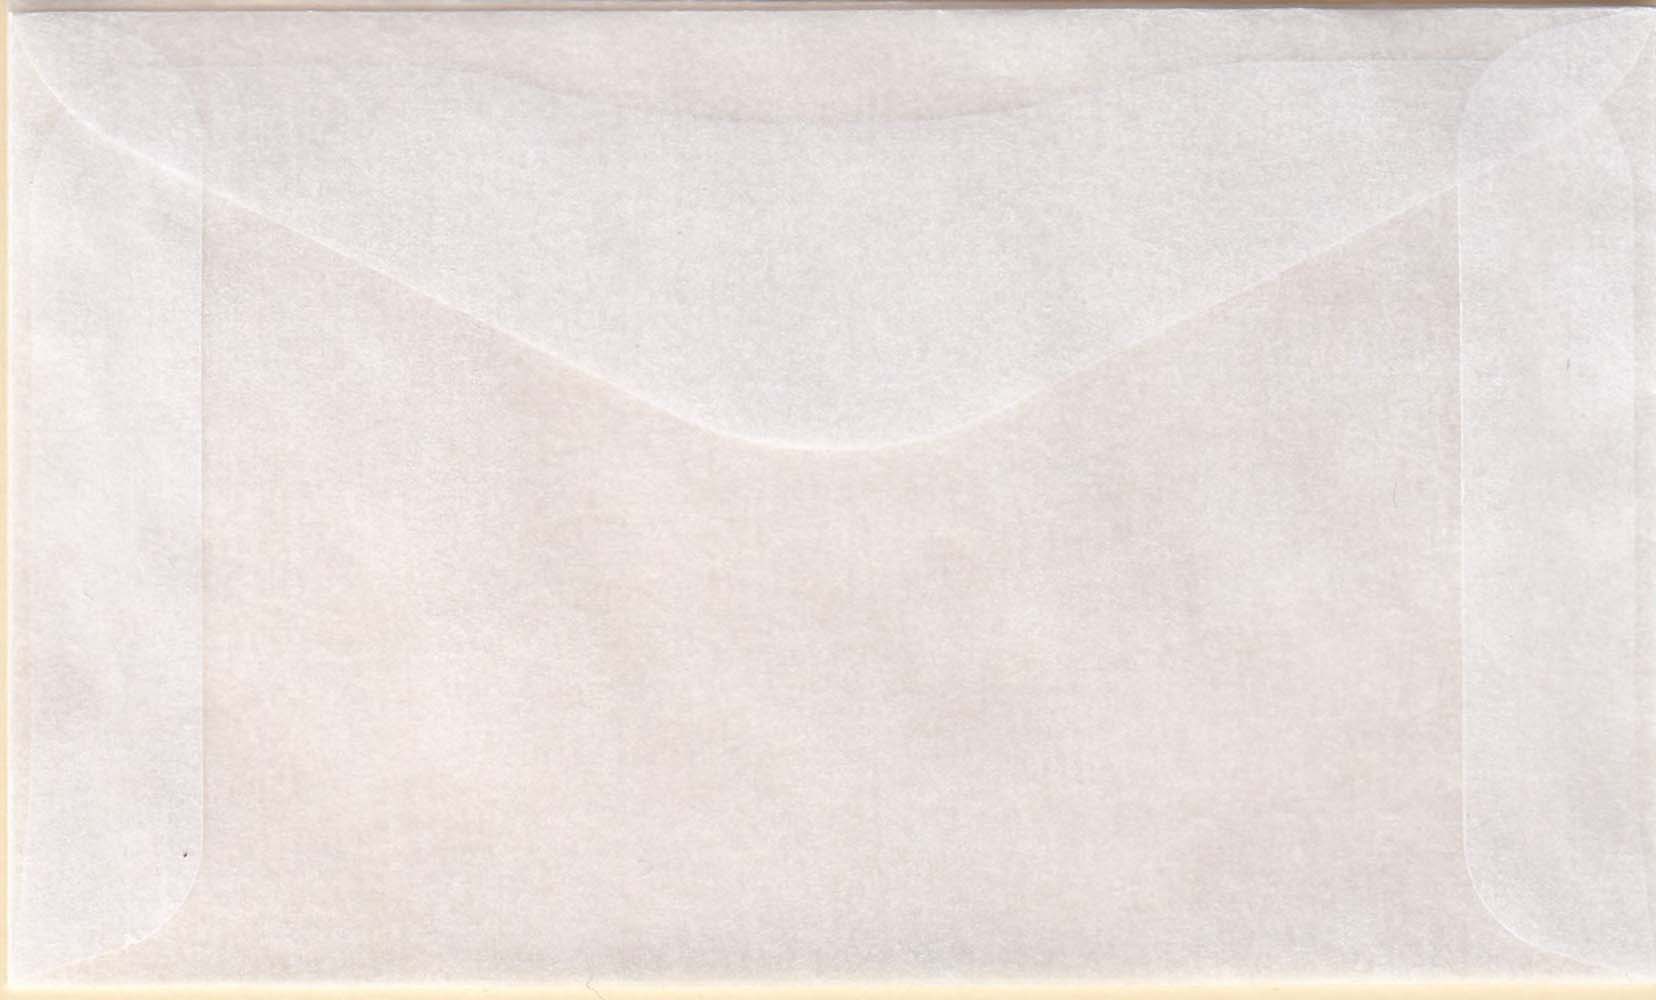 JBM JBM35 Glassine Envelopes #3 -- 4 1/4 x 2 1/2